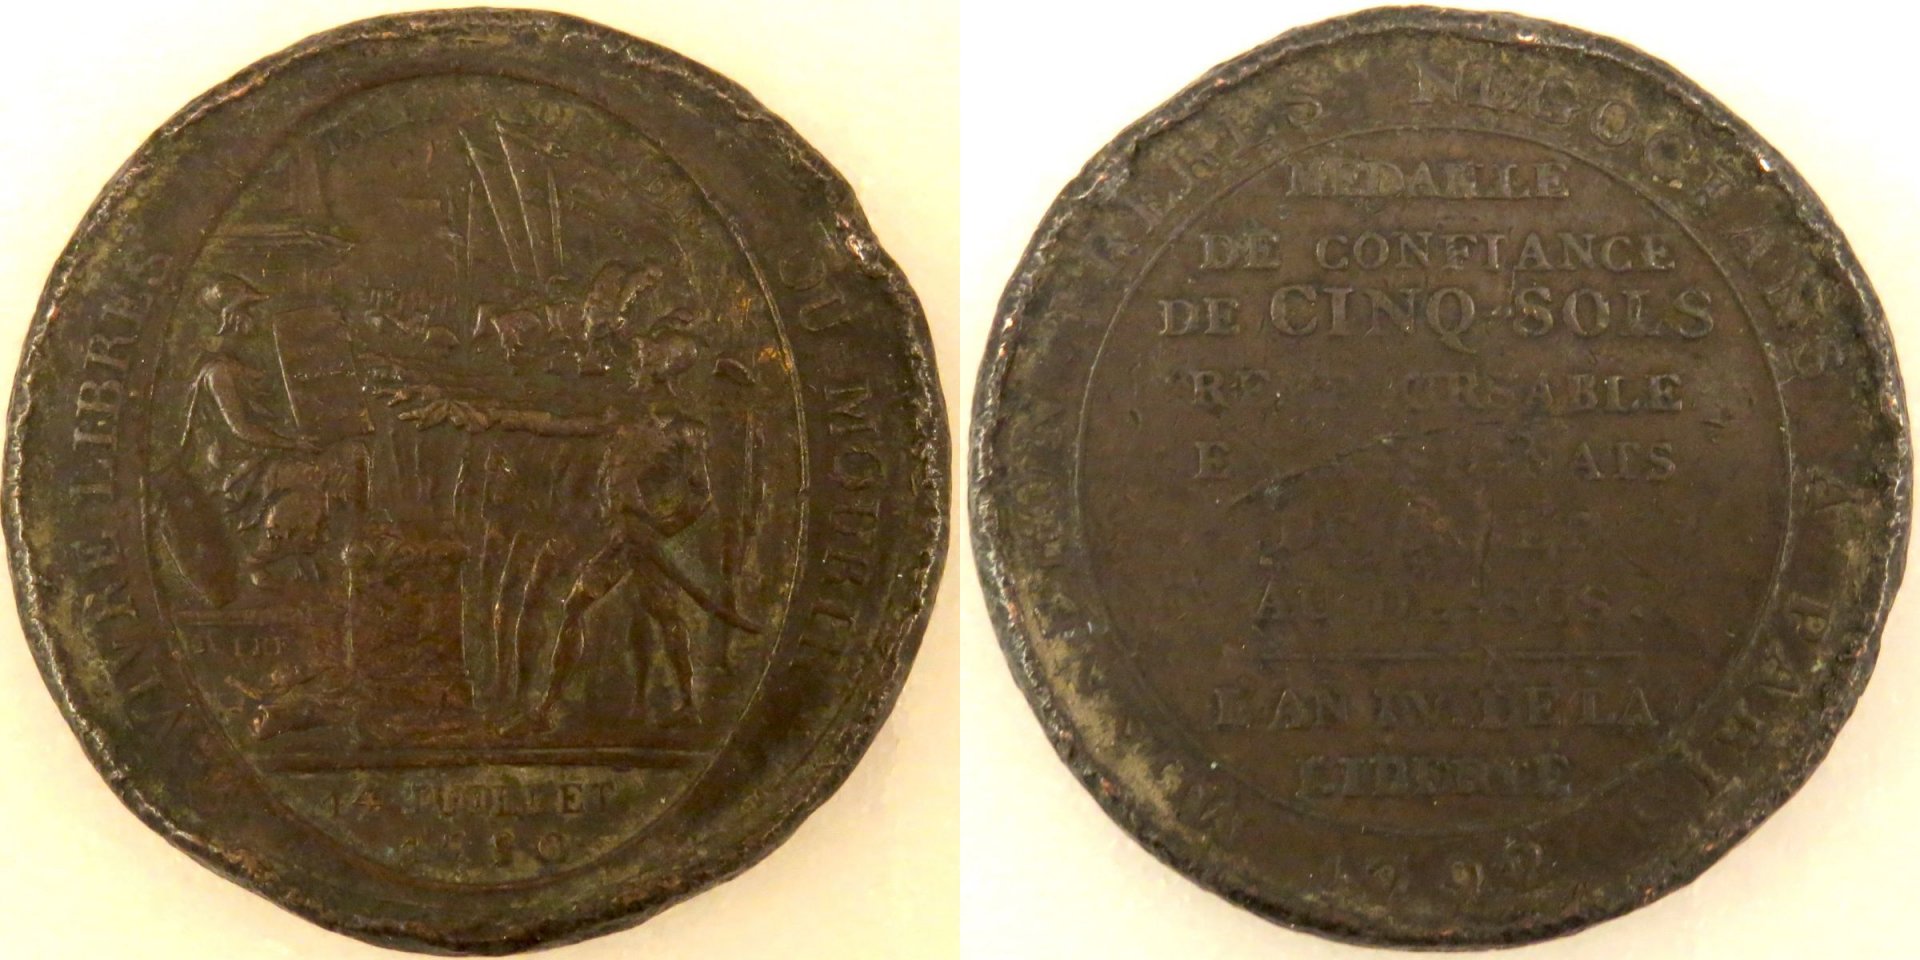 France 1792 5 sols medal 27g 39 mm copy.jpg